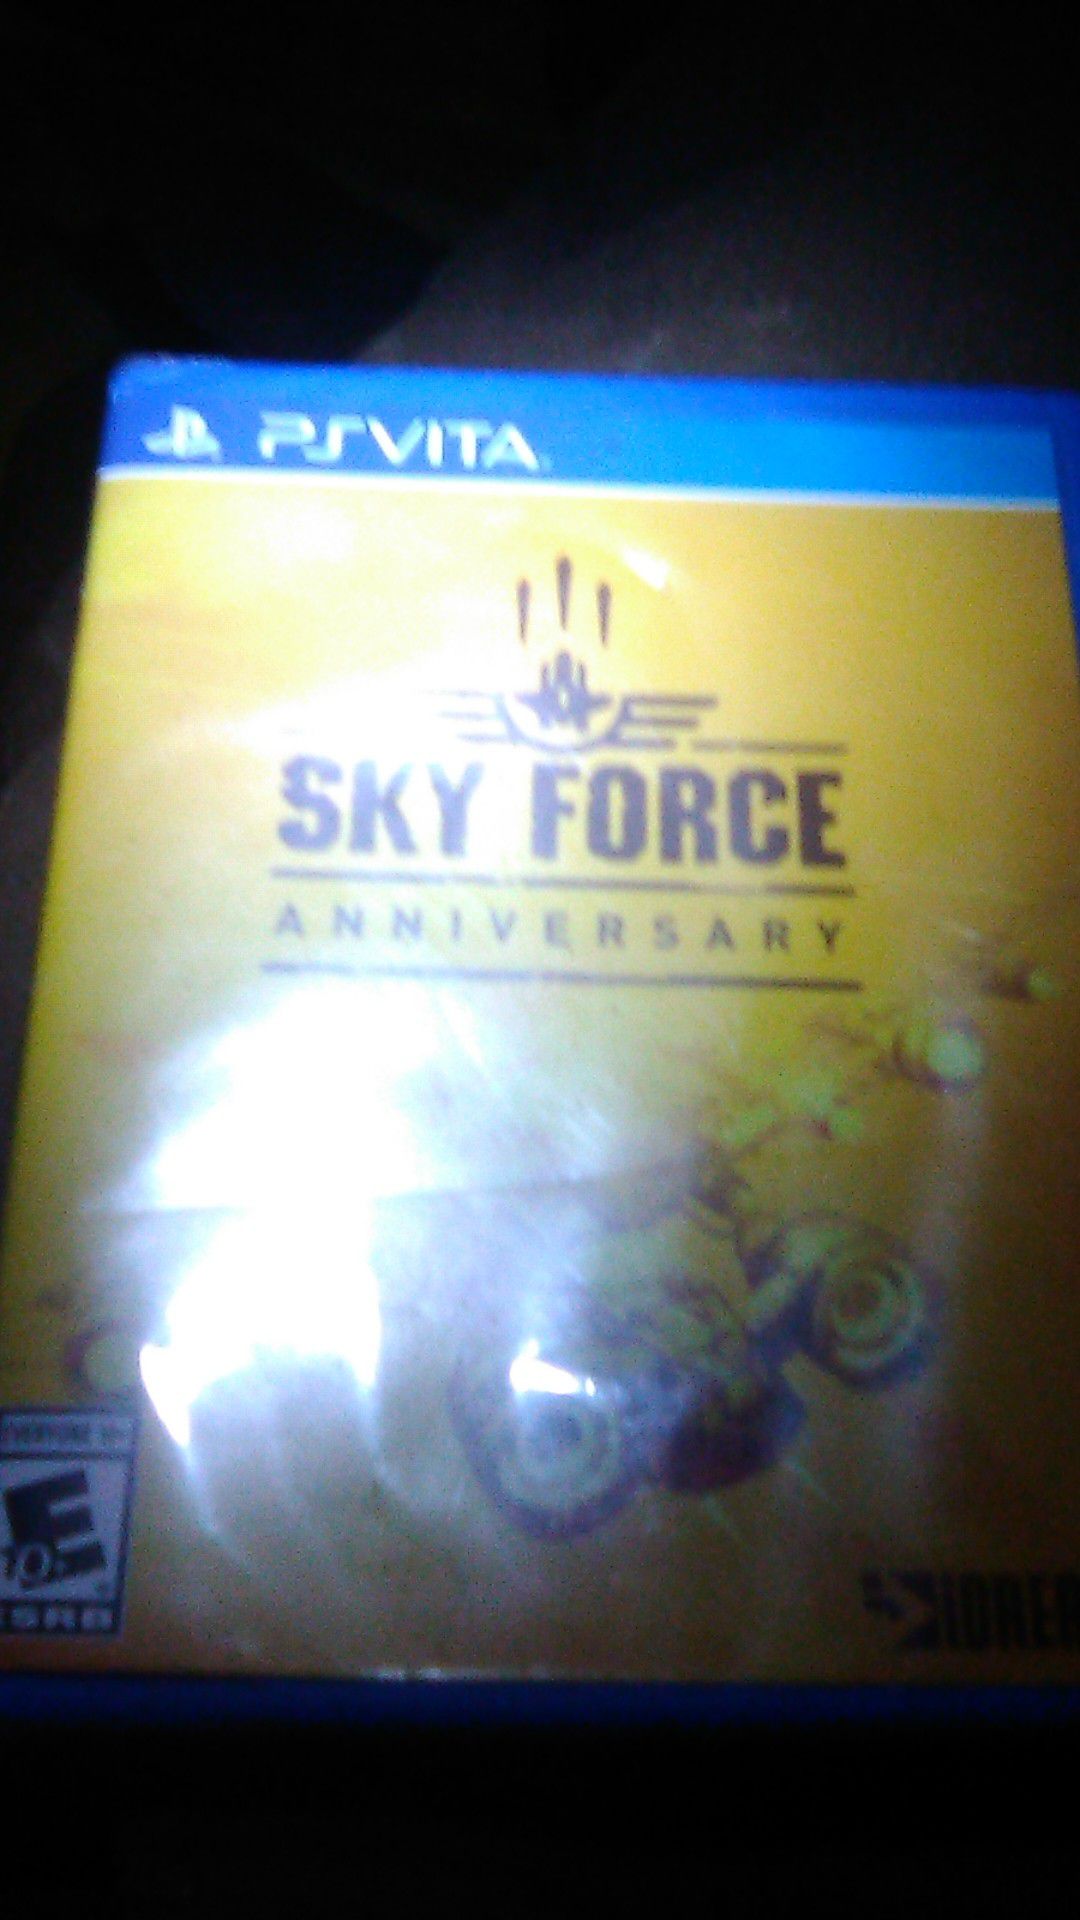 PS Vita sky force anniversary